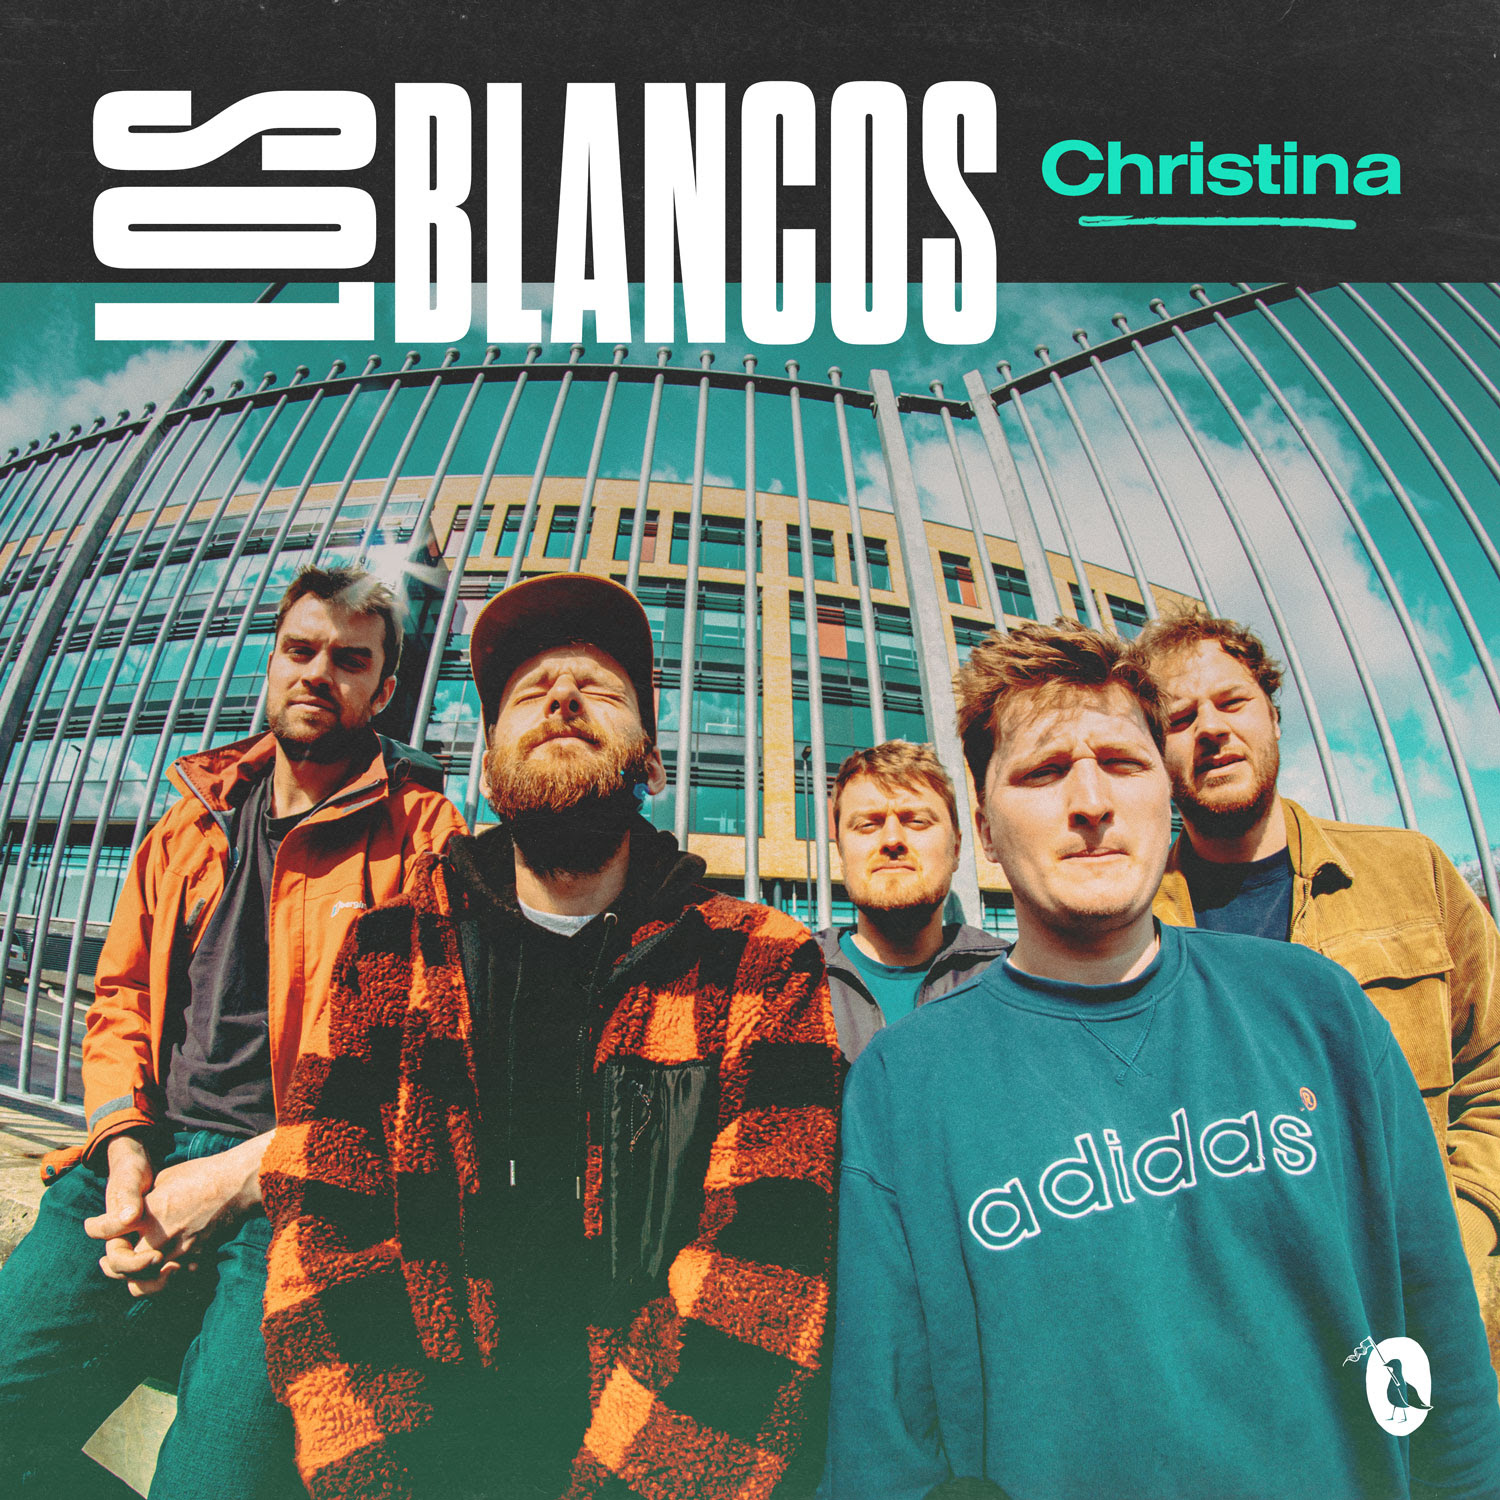 LISTEN: “Christina” by Los Blancos